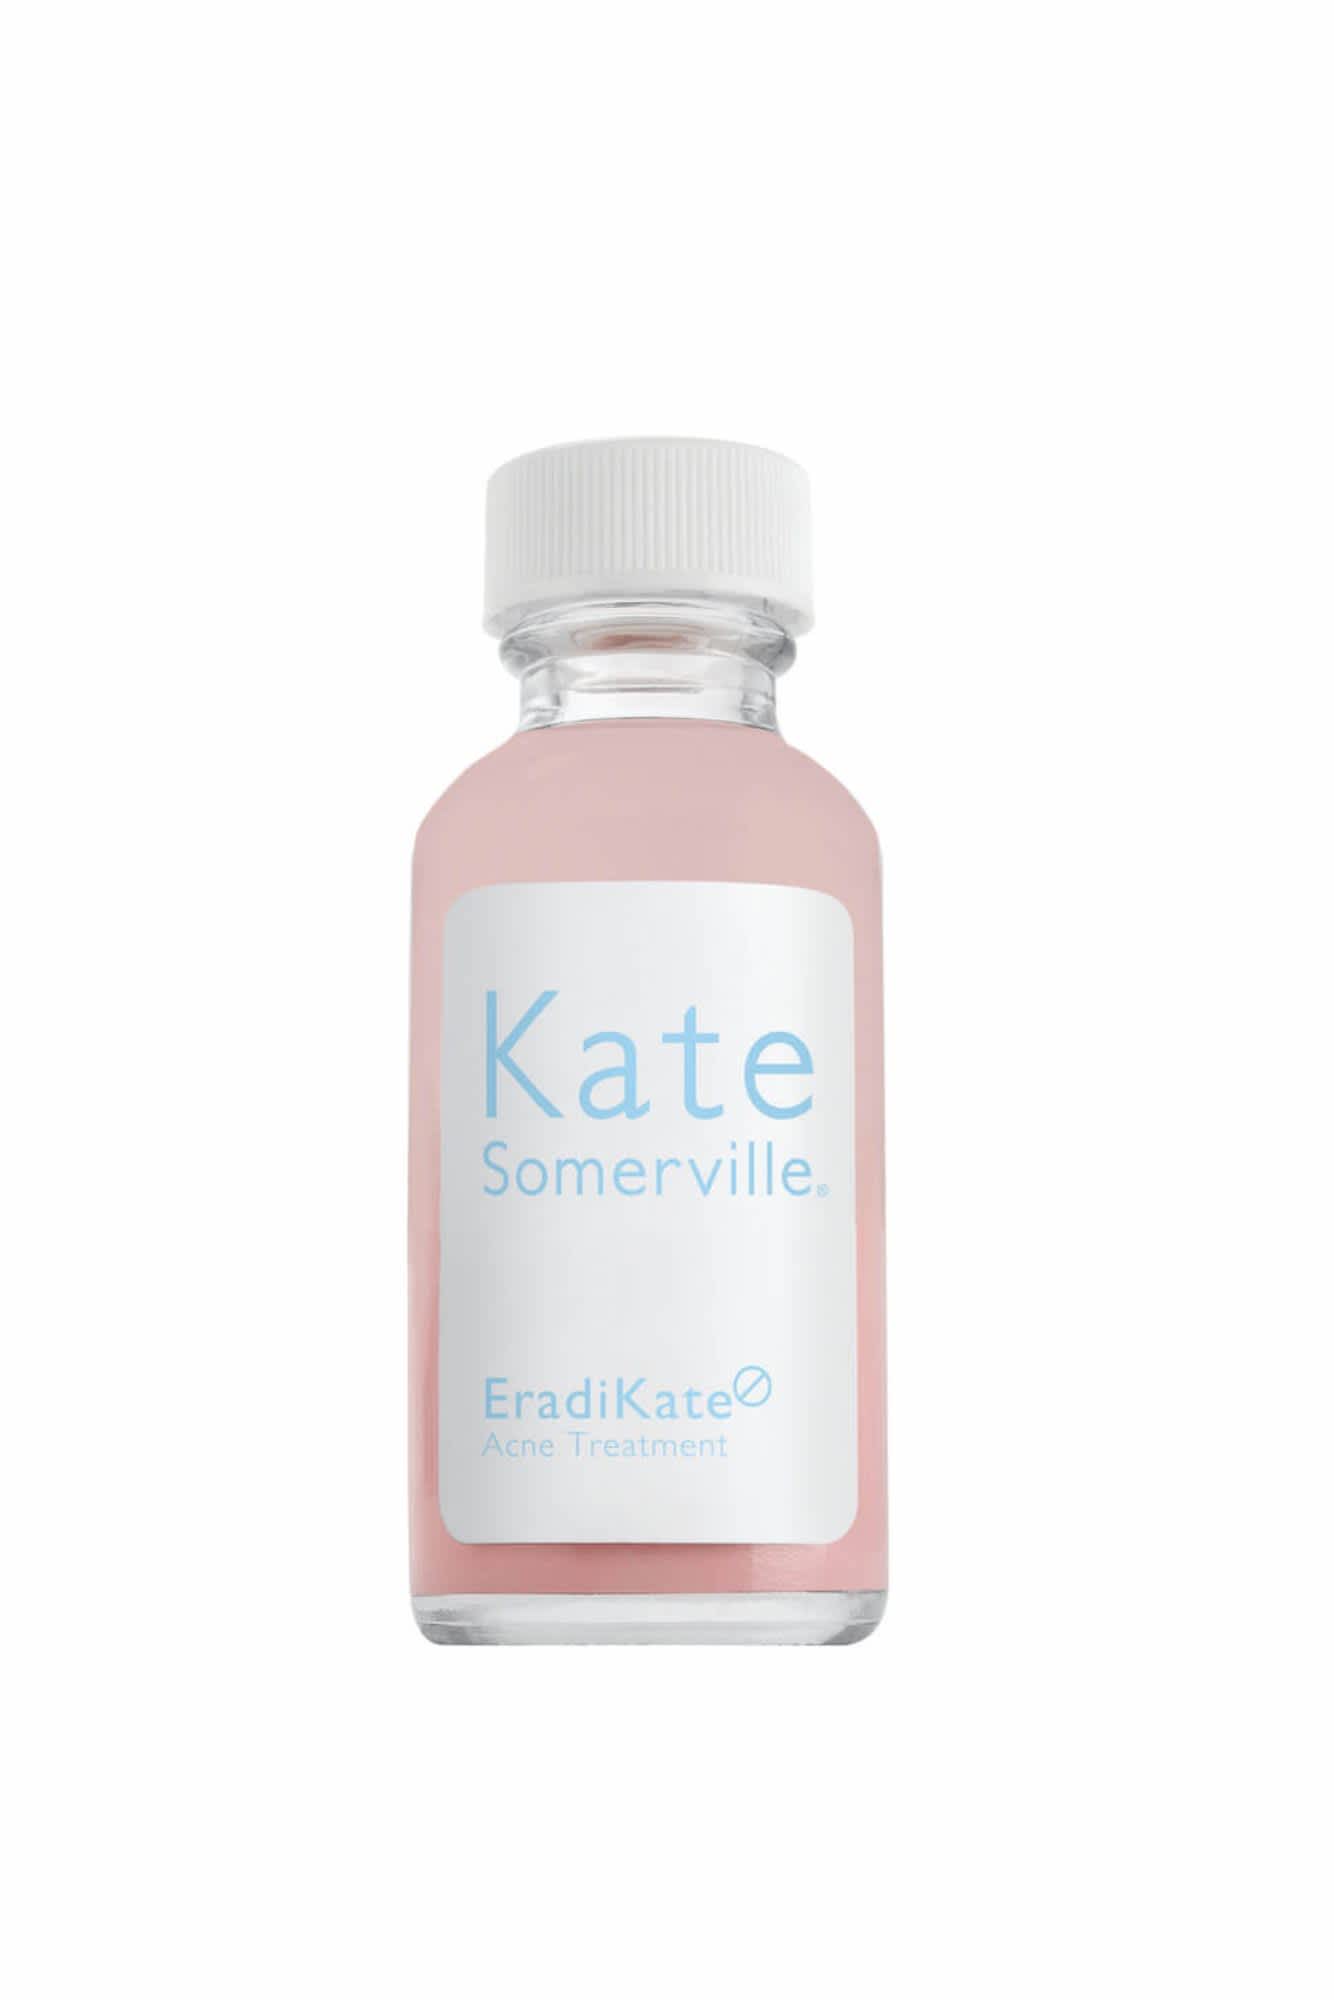 Kate Somerville, Eradikate Acne Treatment ($42)